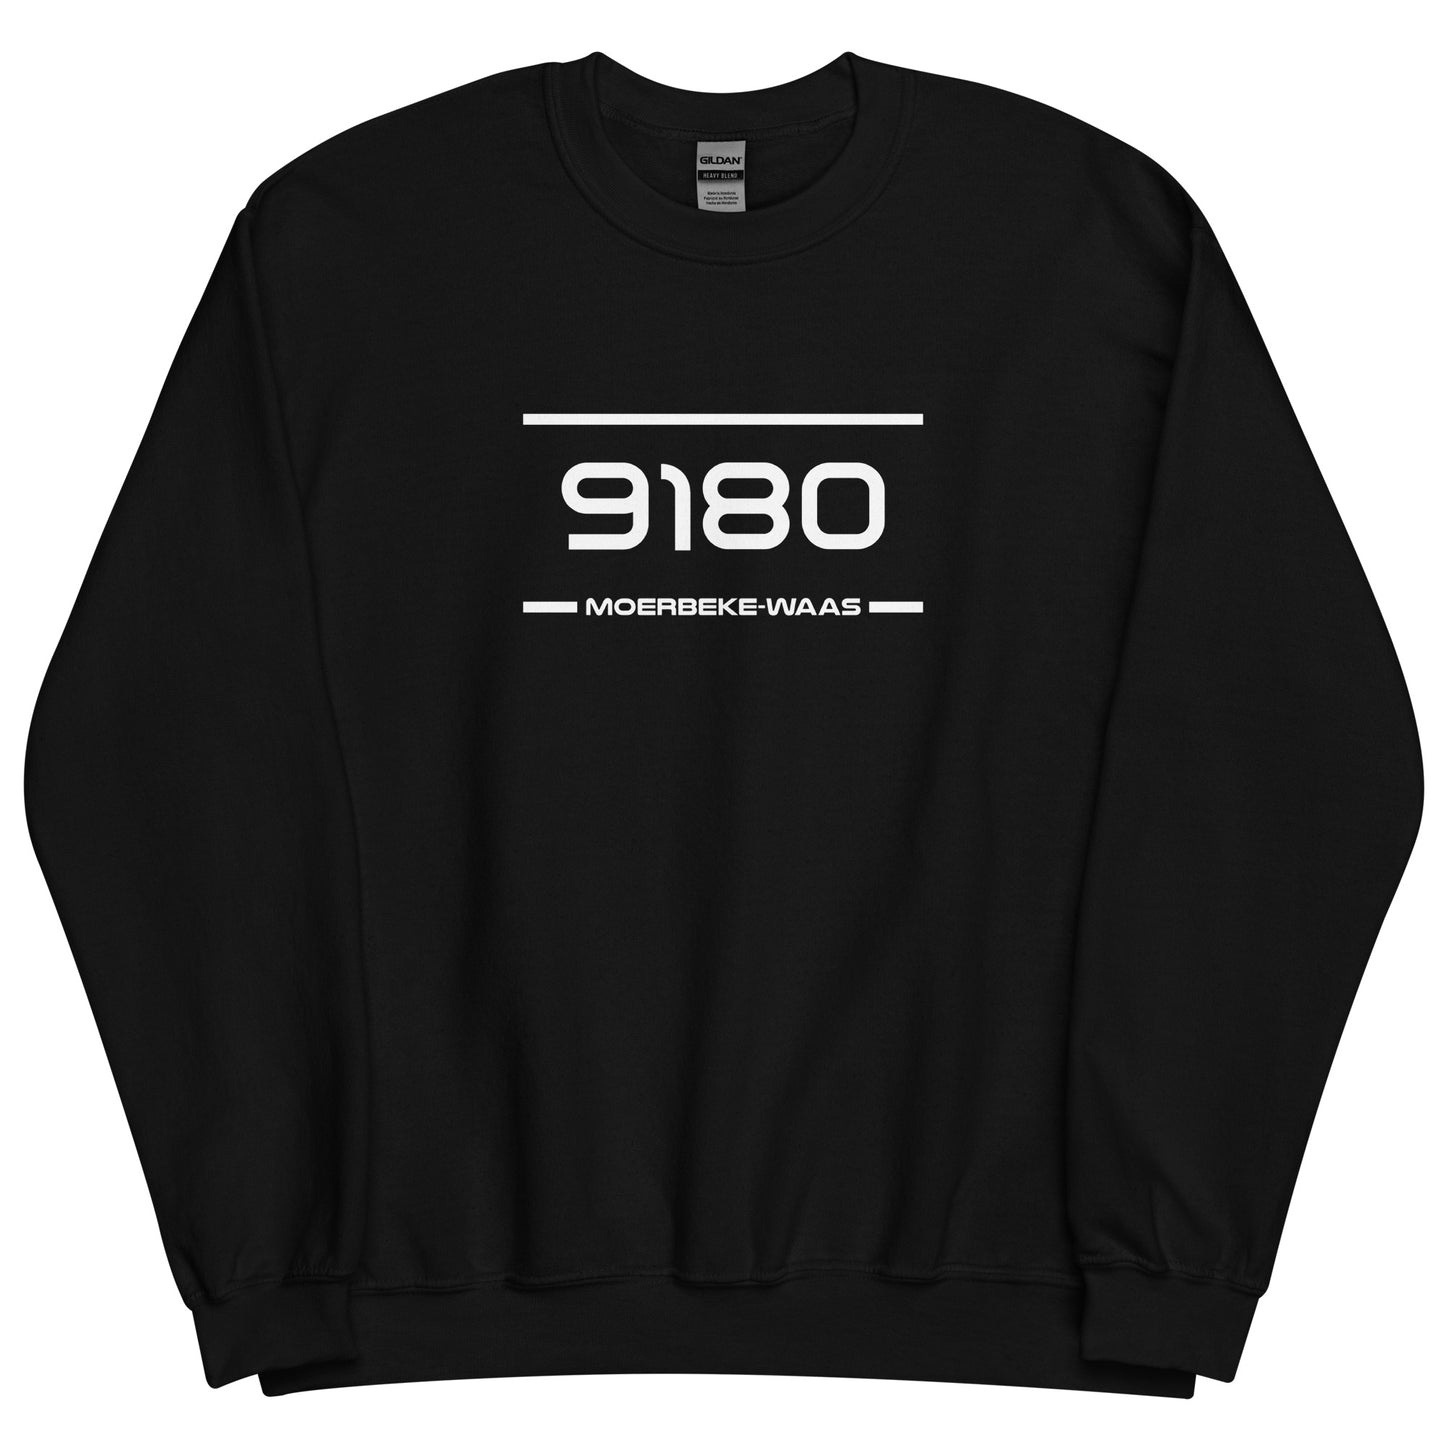 Sweater - 9180 - Moerbeke-Waas (M/V)